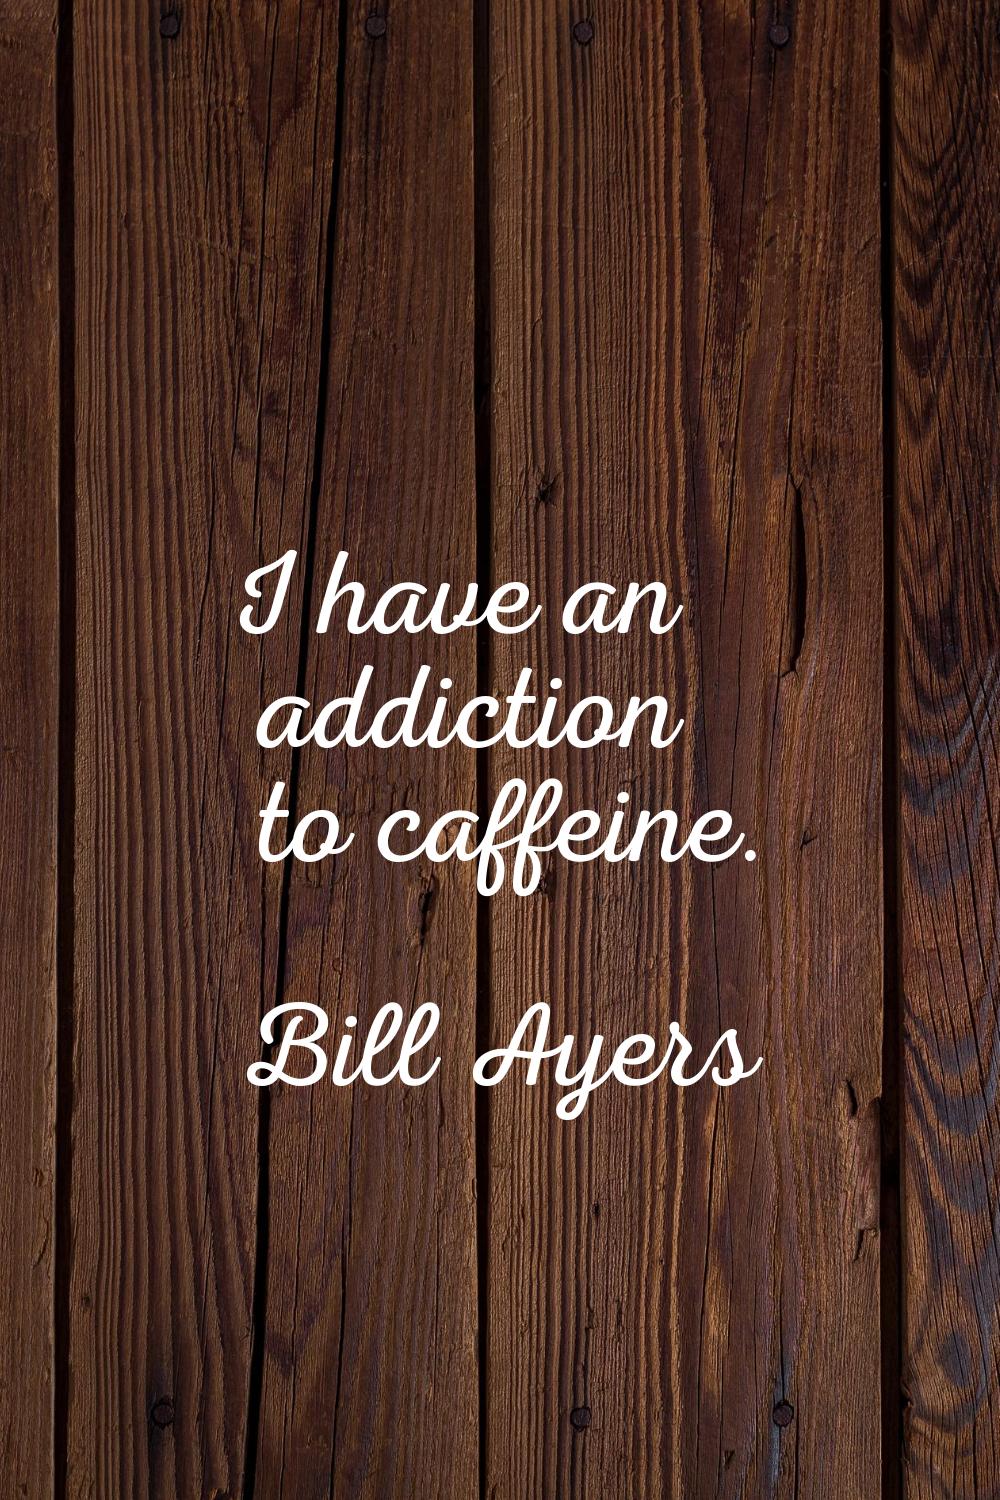 I have an addiction to caffeine.